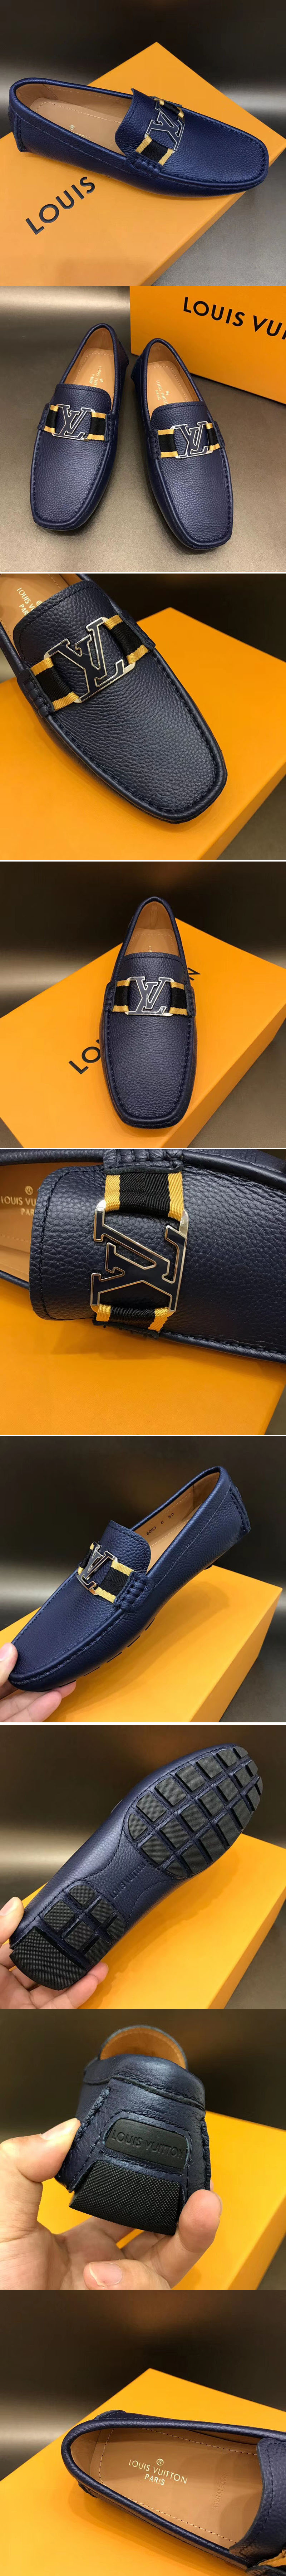 Replica Louis Vuitton LV Monte Carlo Moccasin Shoes Blue Calf Leather